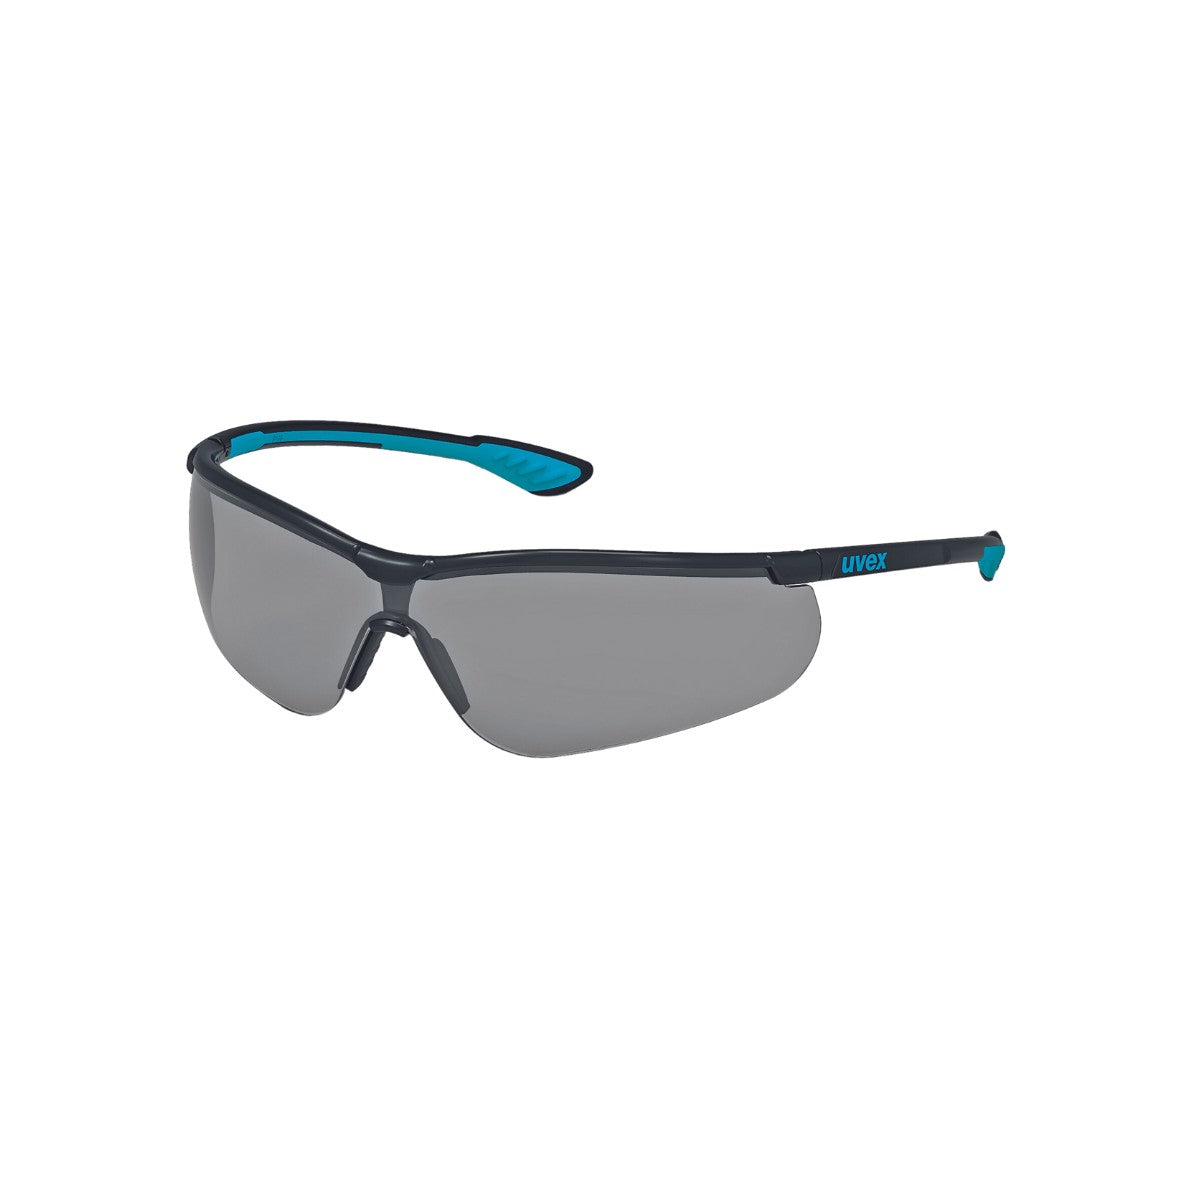 uvex Oceania Polarised Safety Glasses - Grey Polarised Lens 9101-093 (